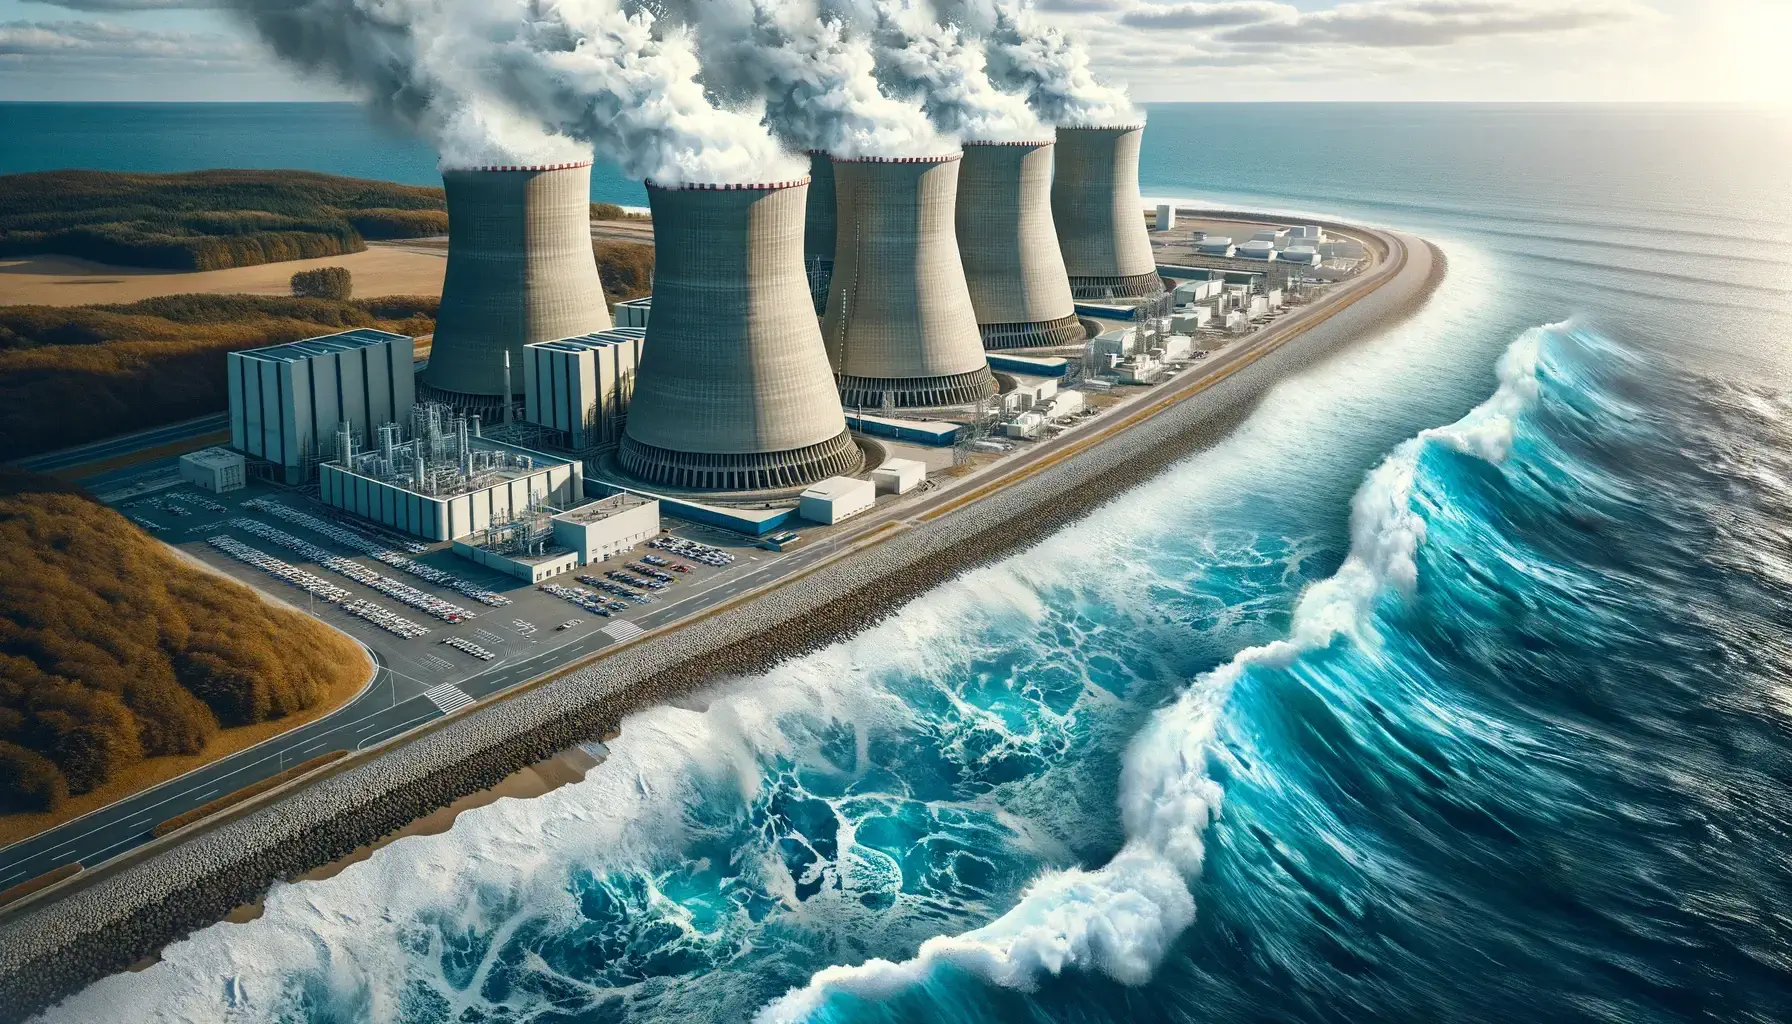 energia prodotta nei reattori nucleari